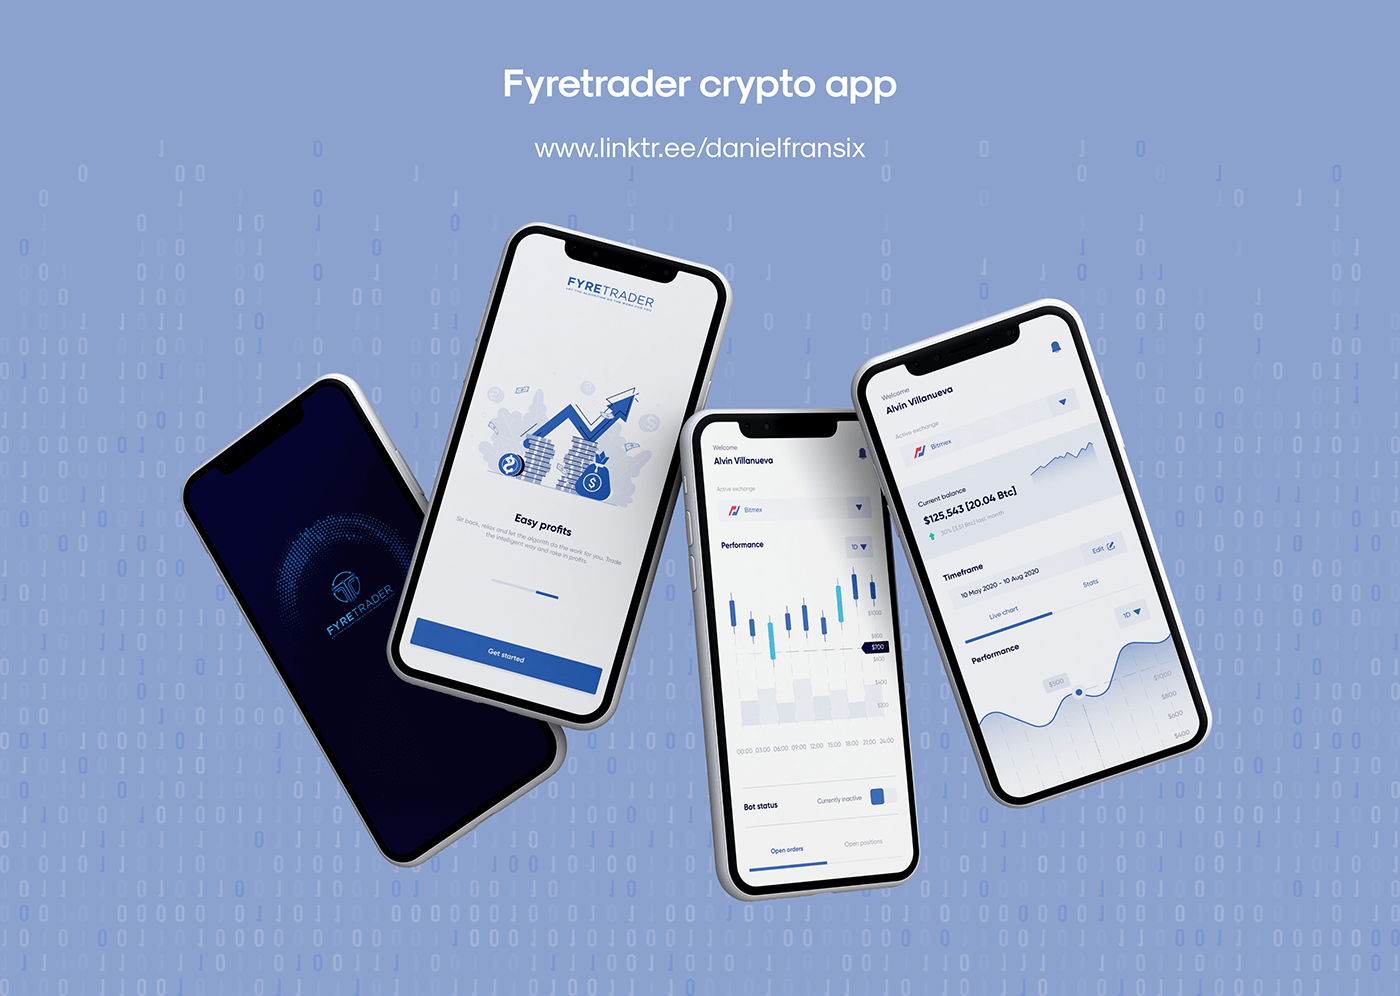 Fyretrader crypto trading app ui/ux design on Behance